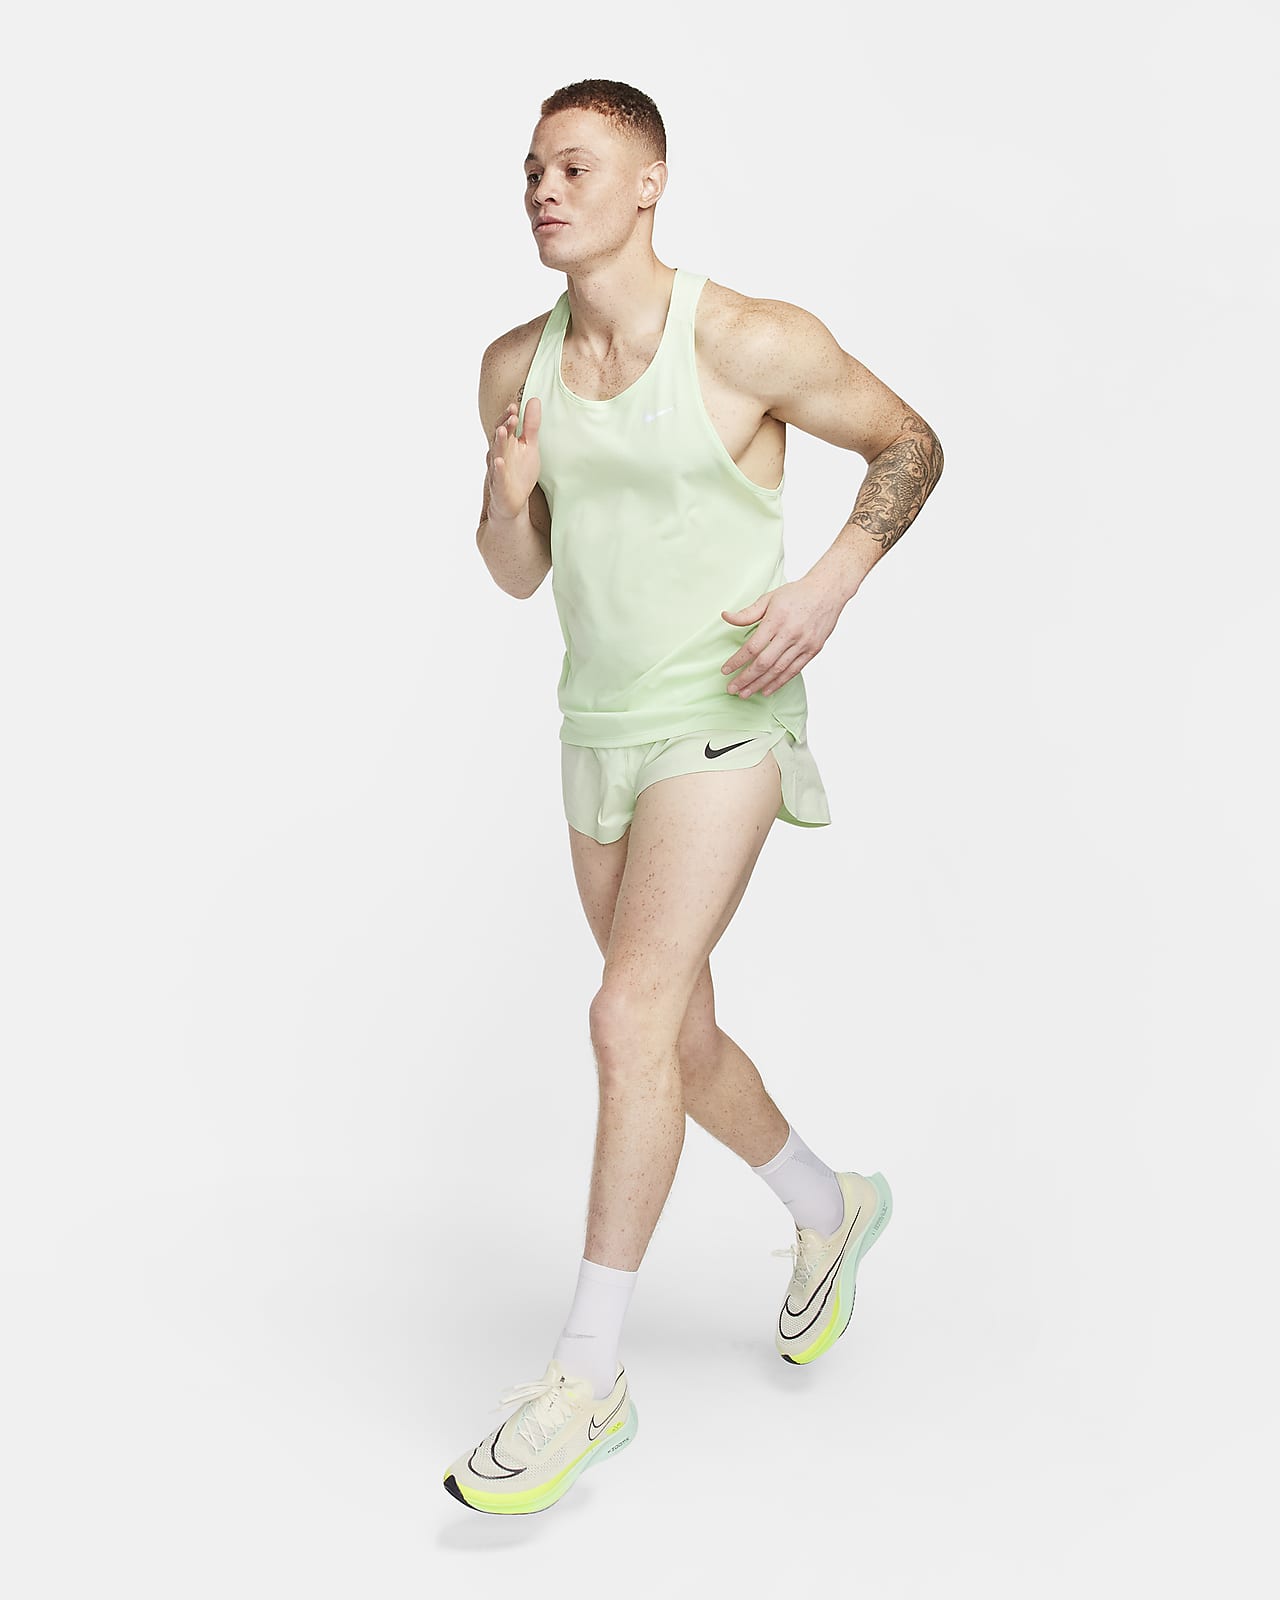 Tank top Nike AeroSwift Men s Running Singlet 